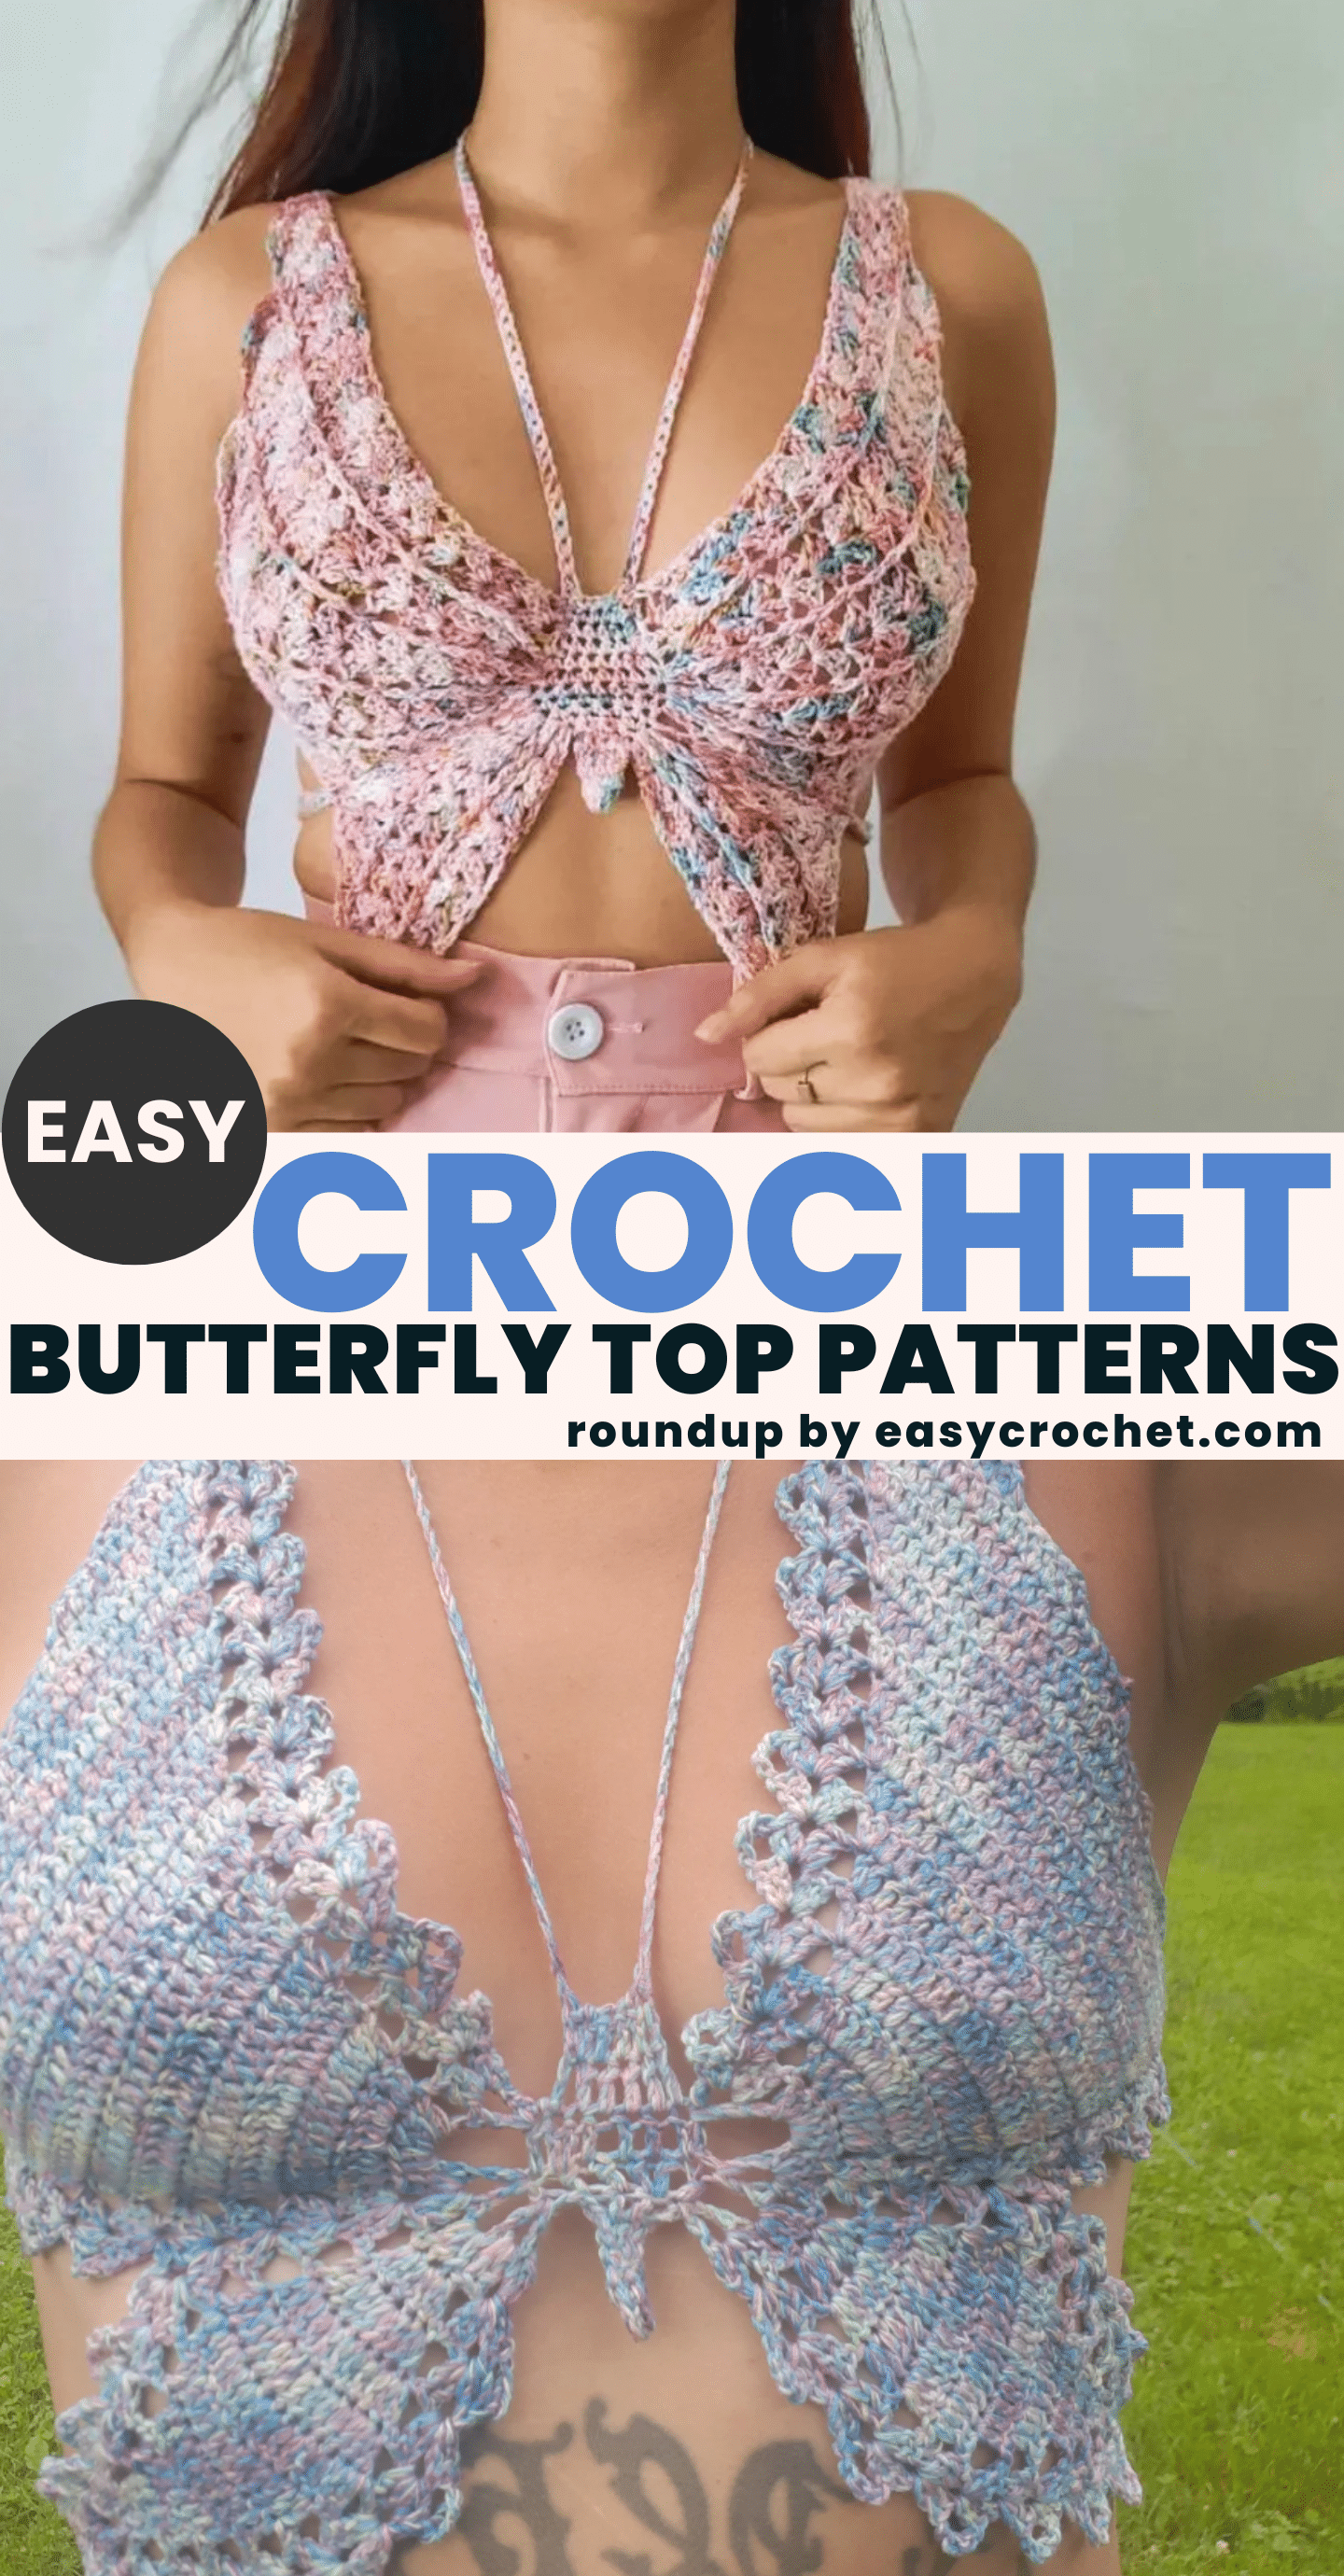 14 Easy to Make Crochet Butterfly Tops You'll Love - Easy Crochet Patterns